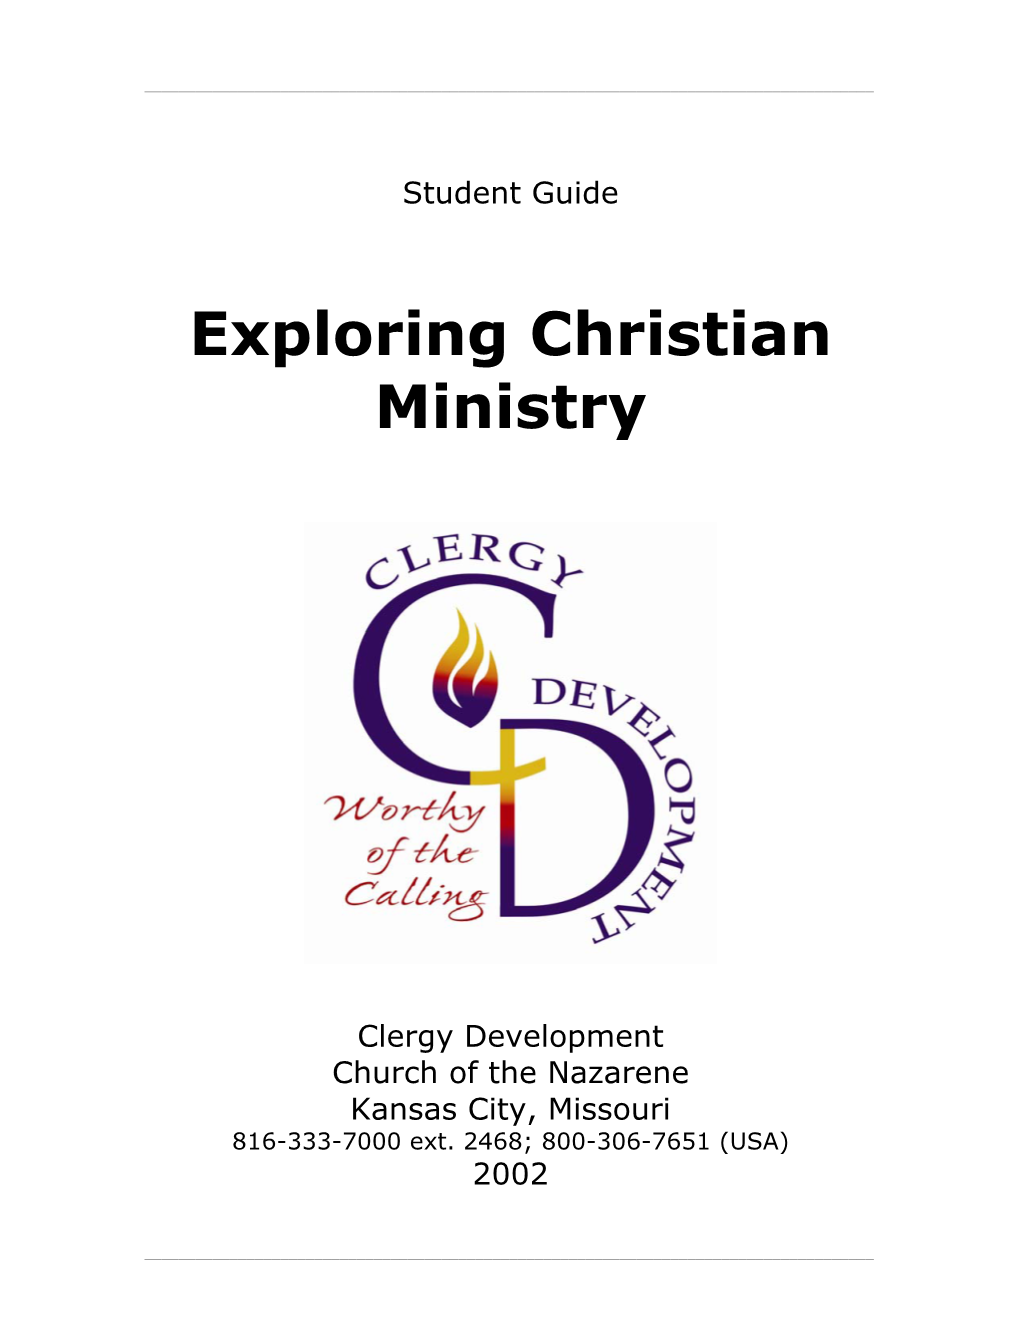 Exploring Christian Ministry